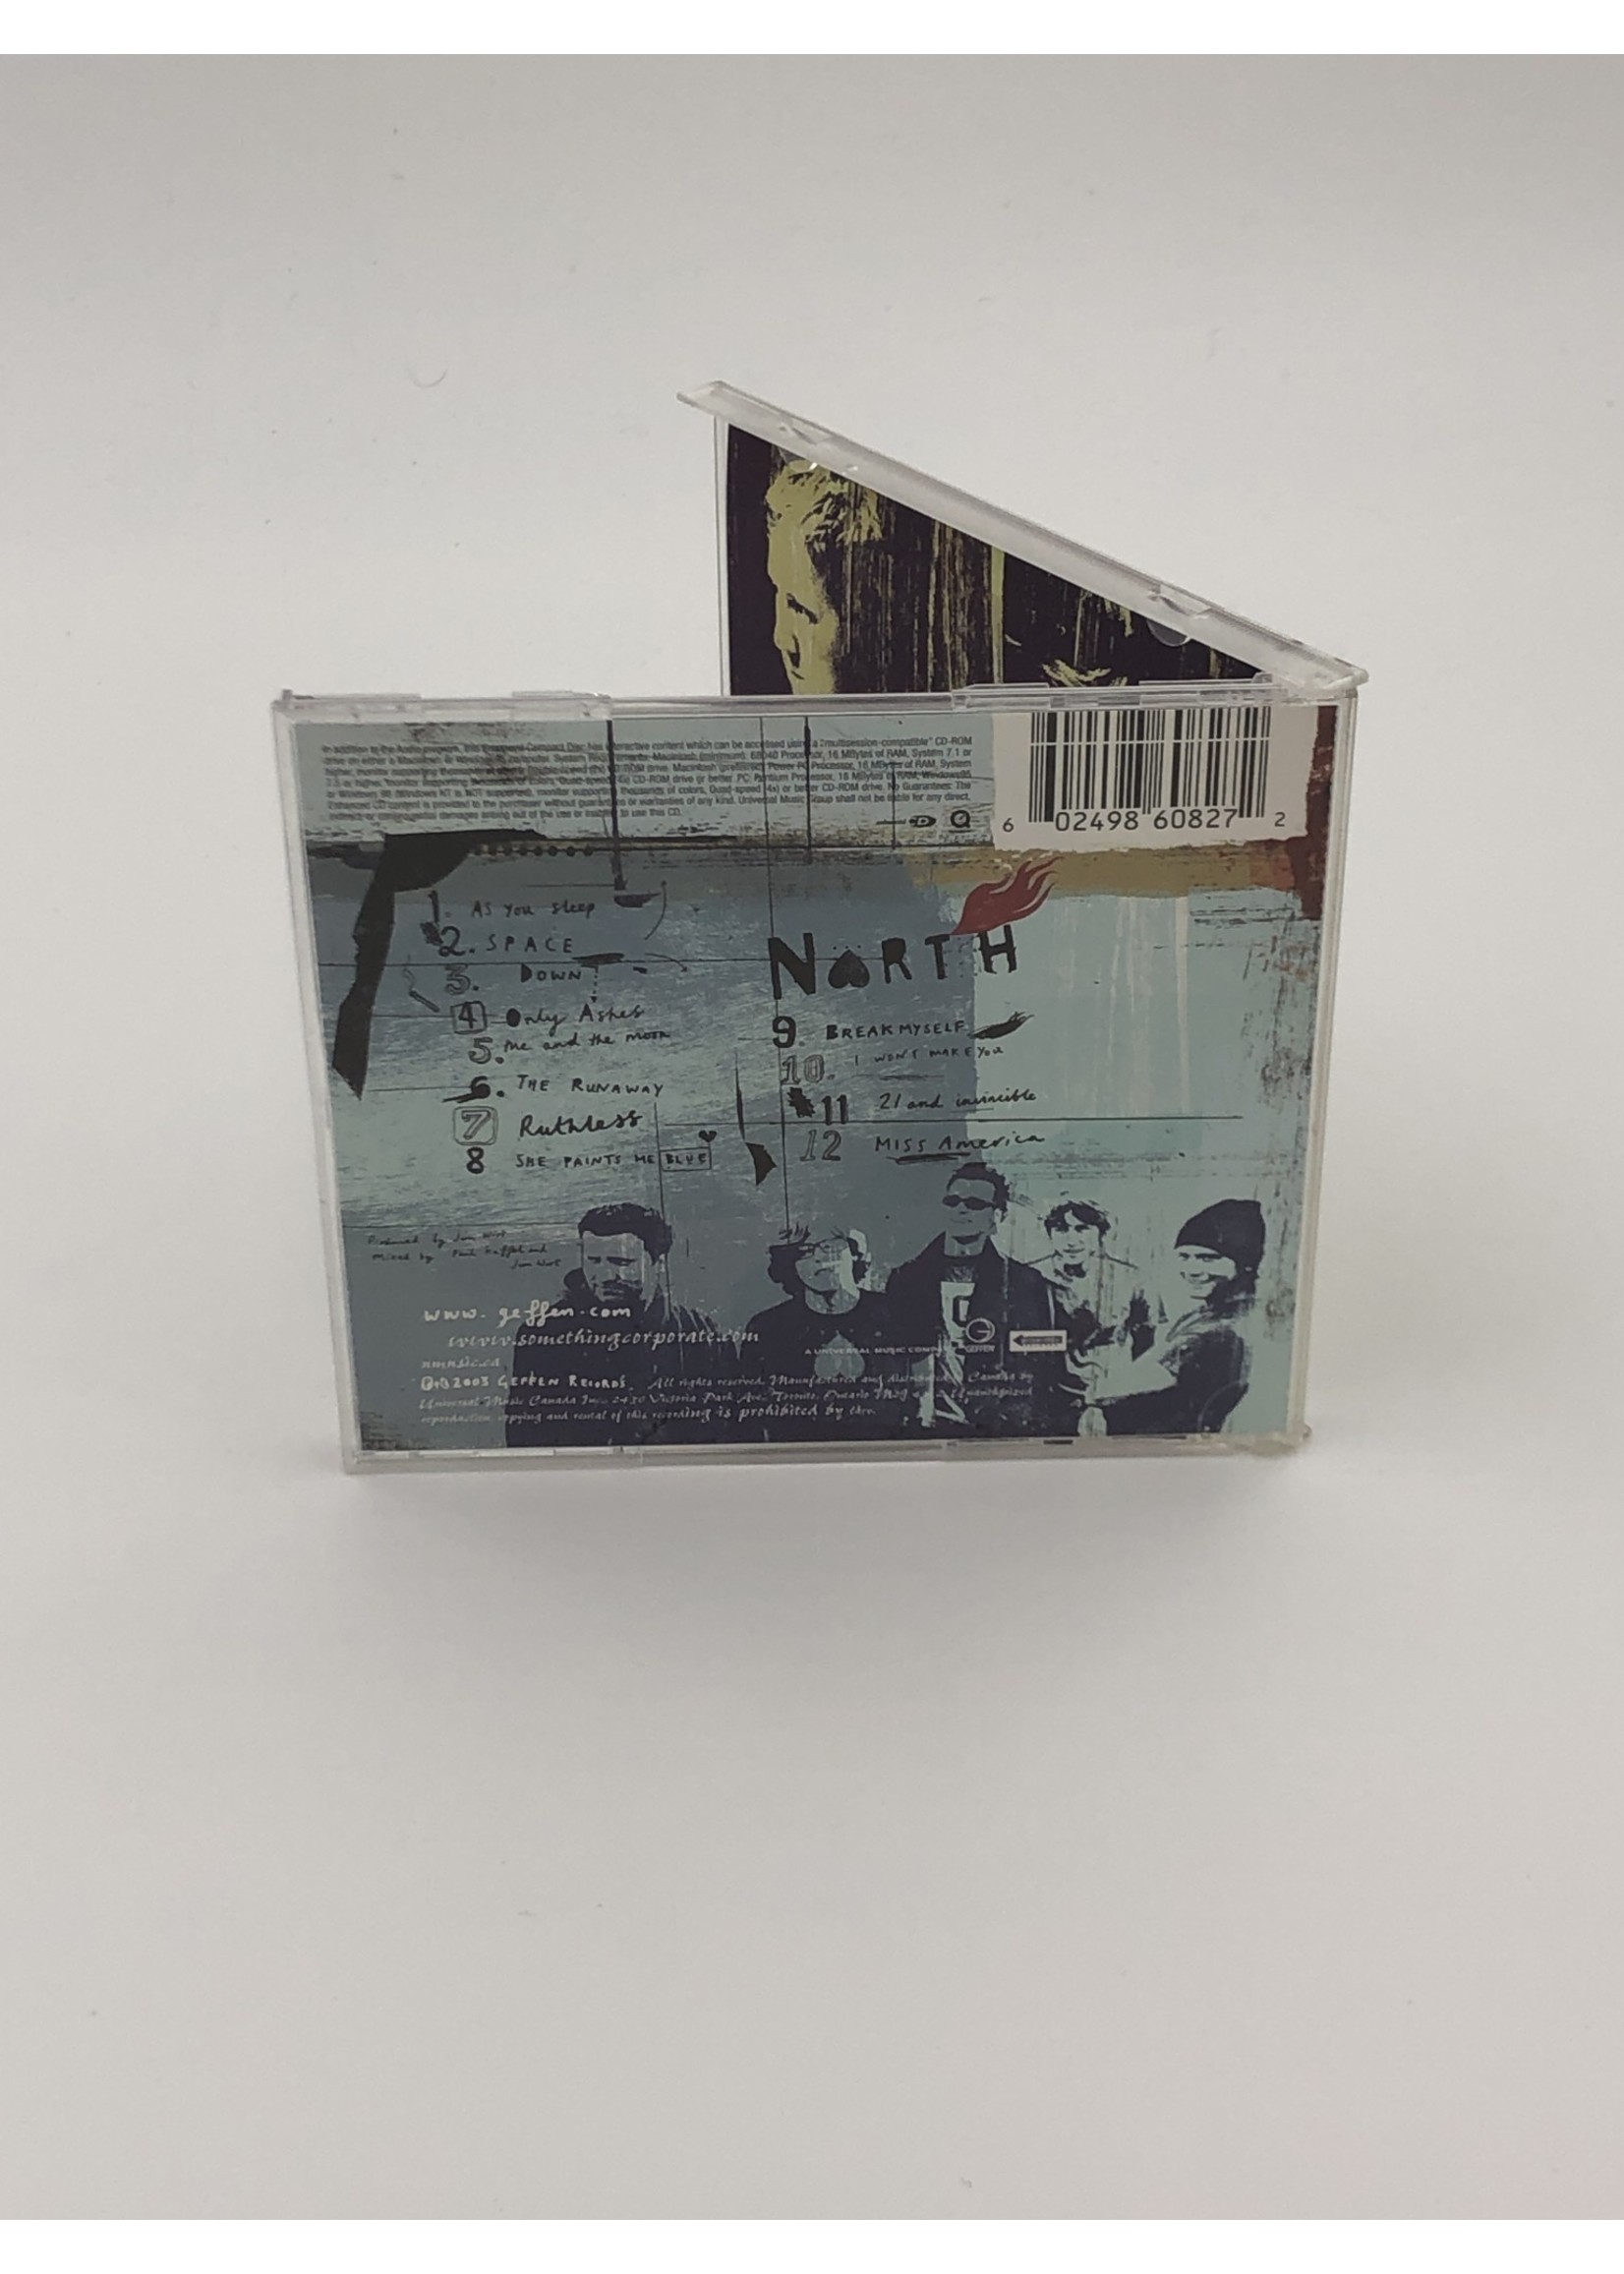 CD Something Corporate: North CD